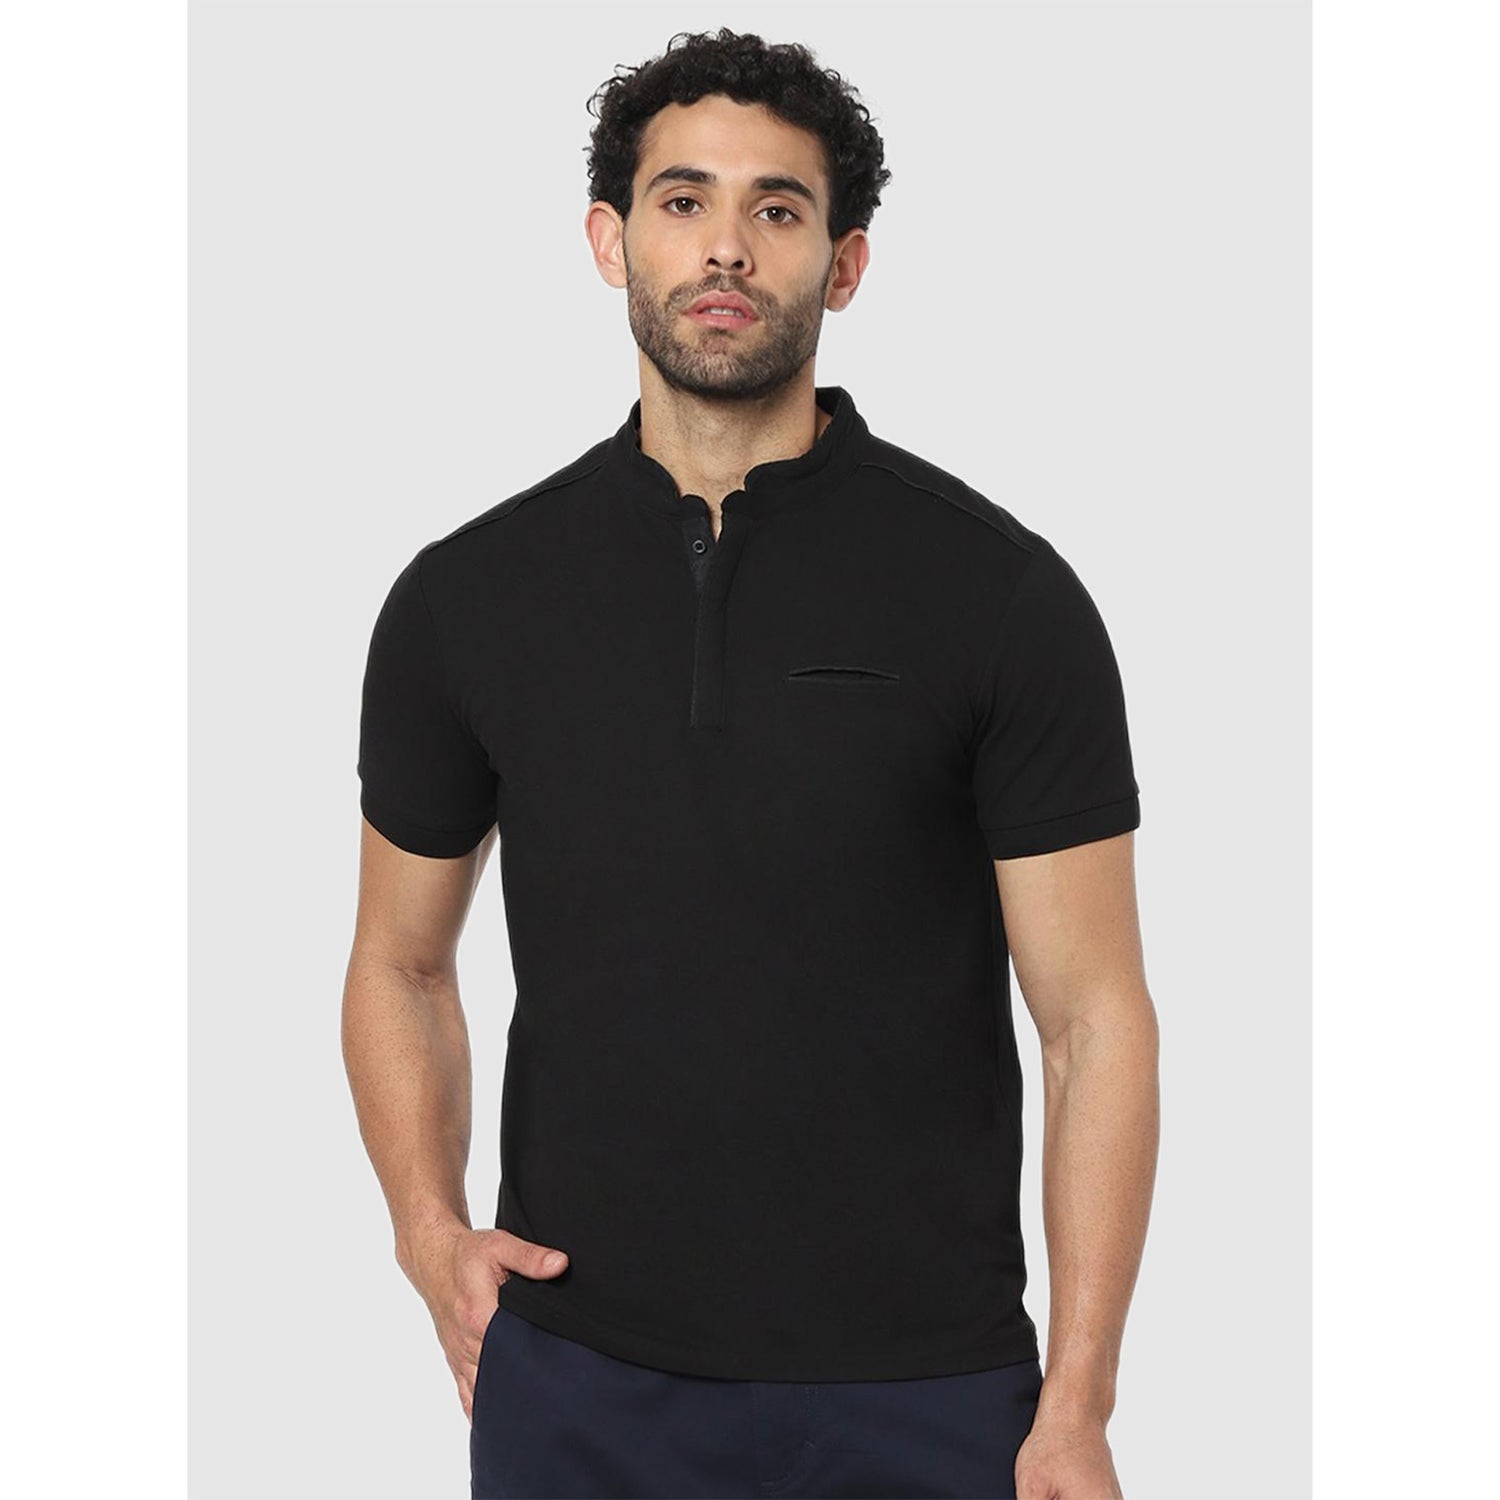 Black Mandarin Collar Slim Fit Cotton T-shirt (VEOFFICERIN1)